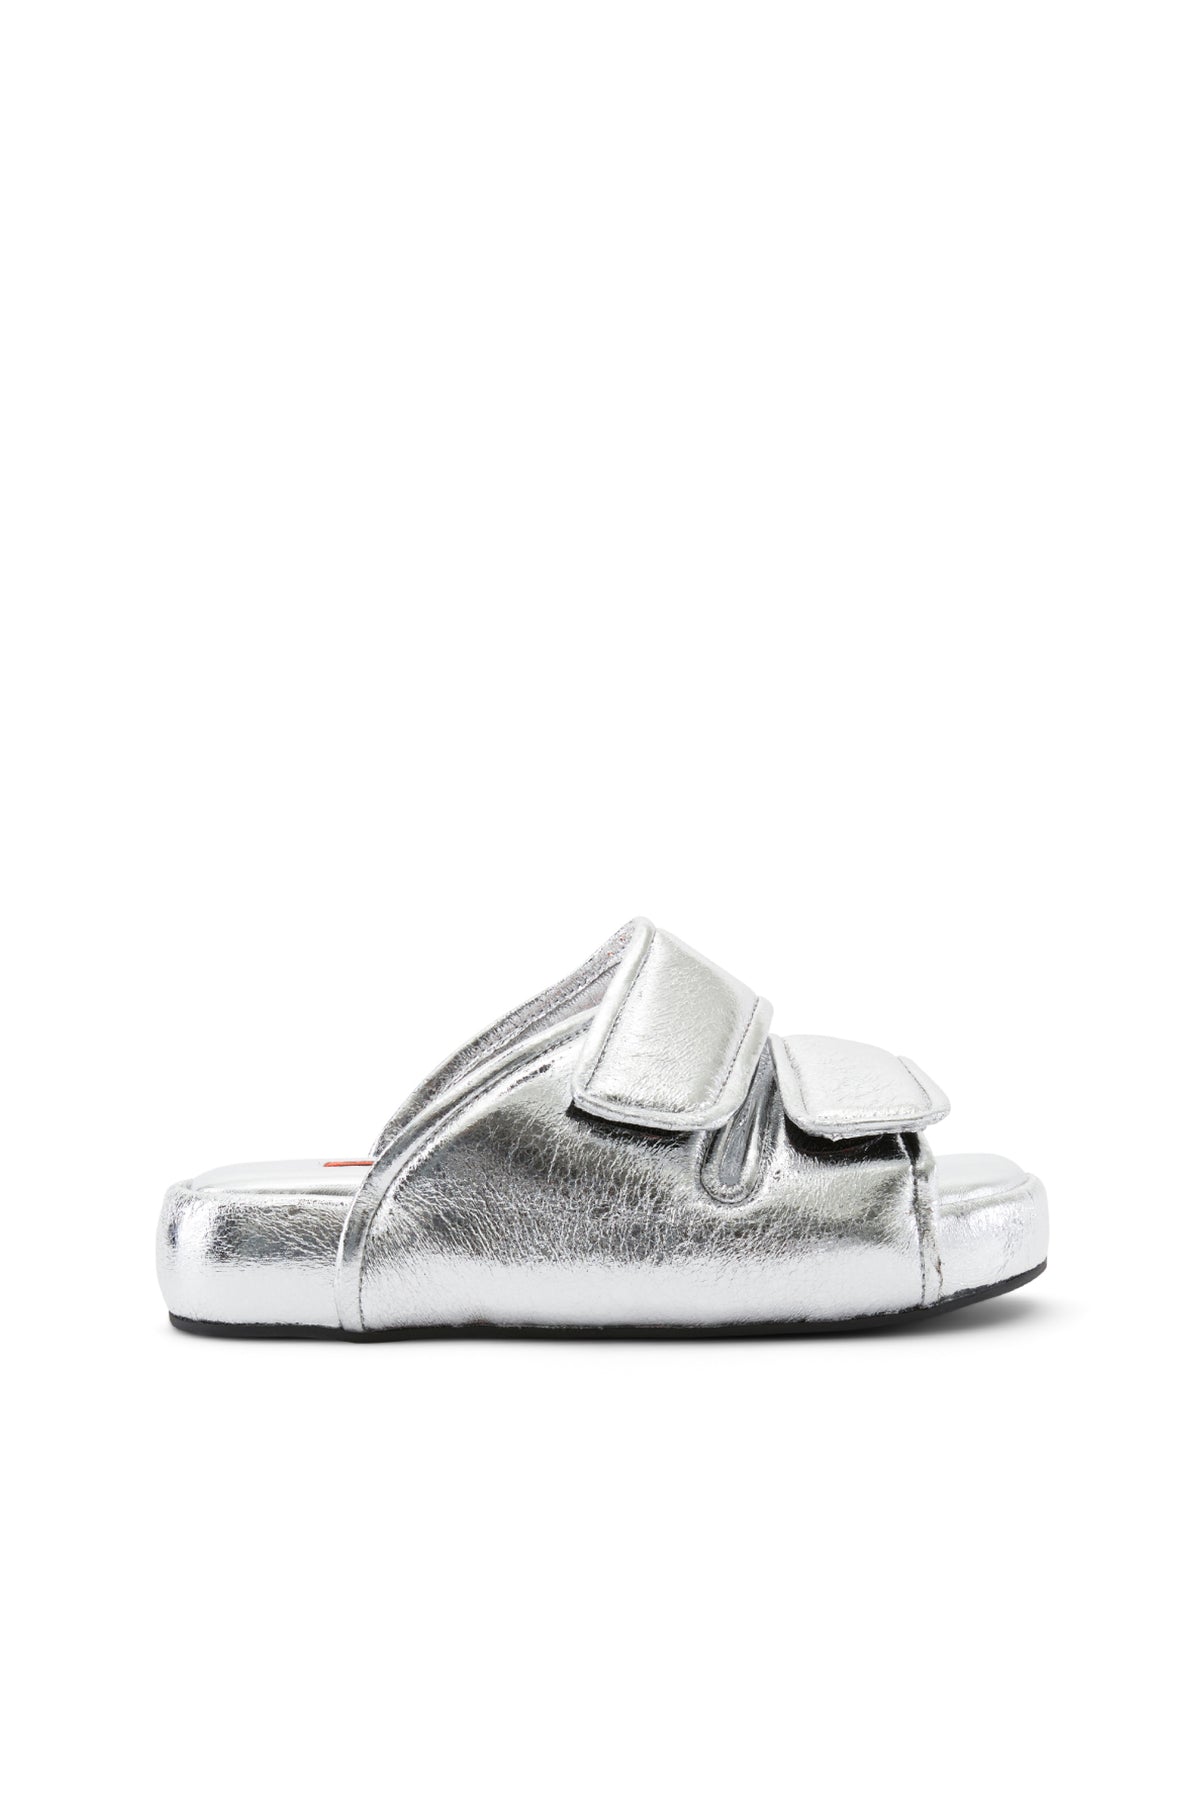 Disco Drop Earring in Silver – Simon Miller